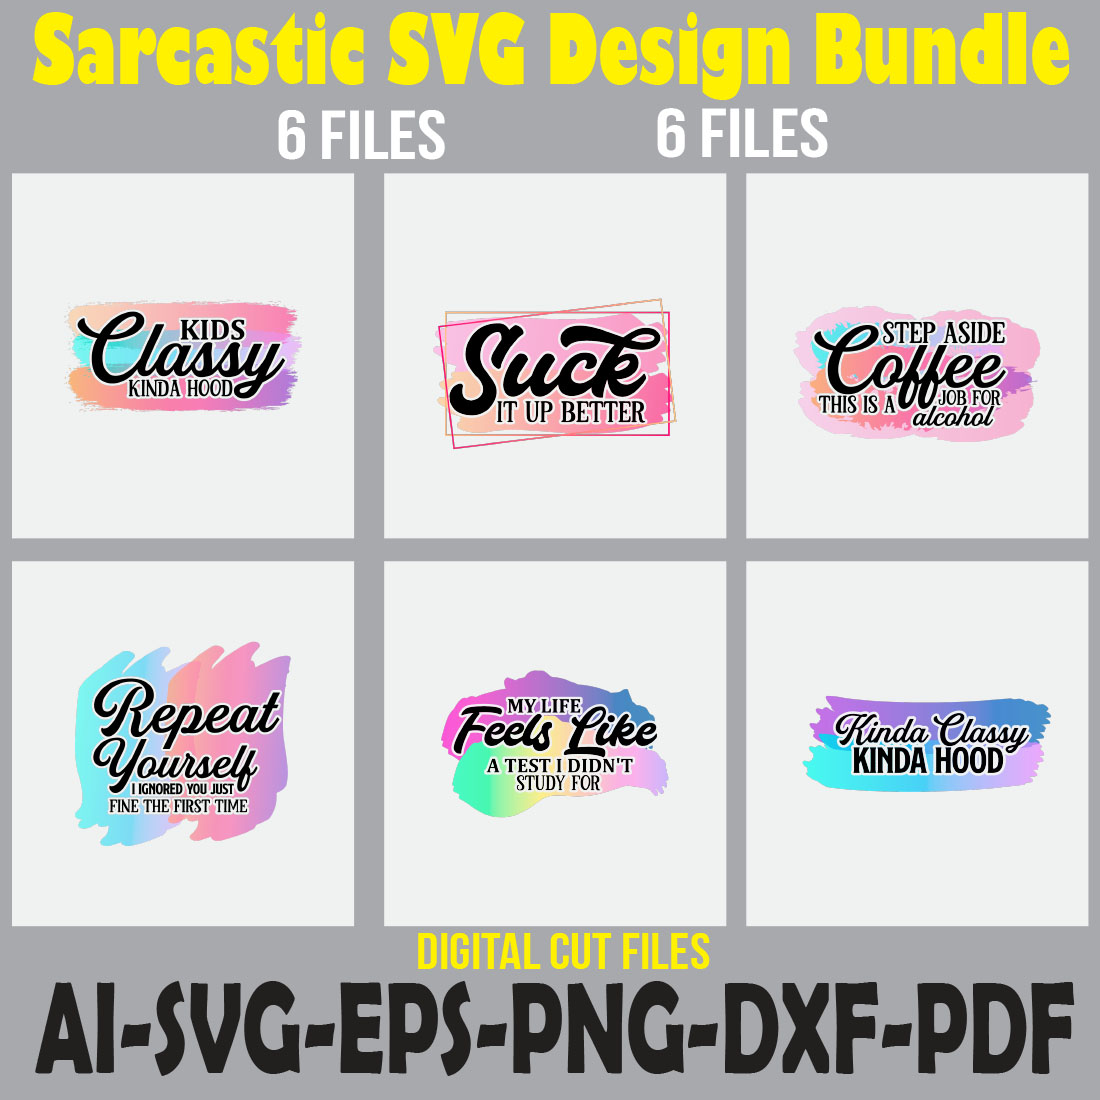 Sarcastic SVG Design Bundle cover image.